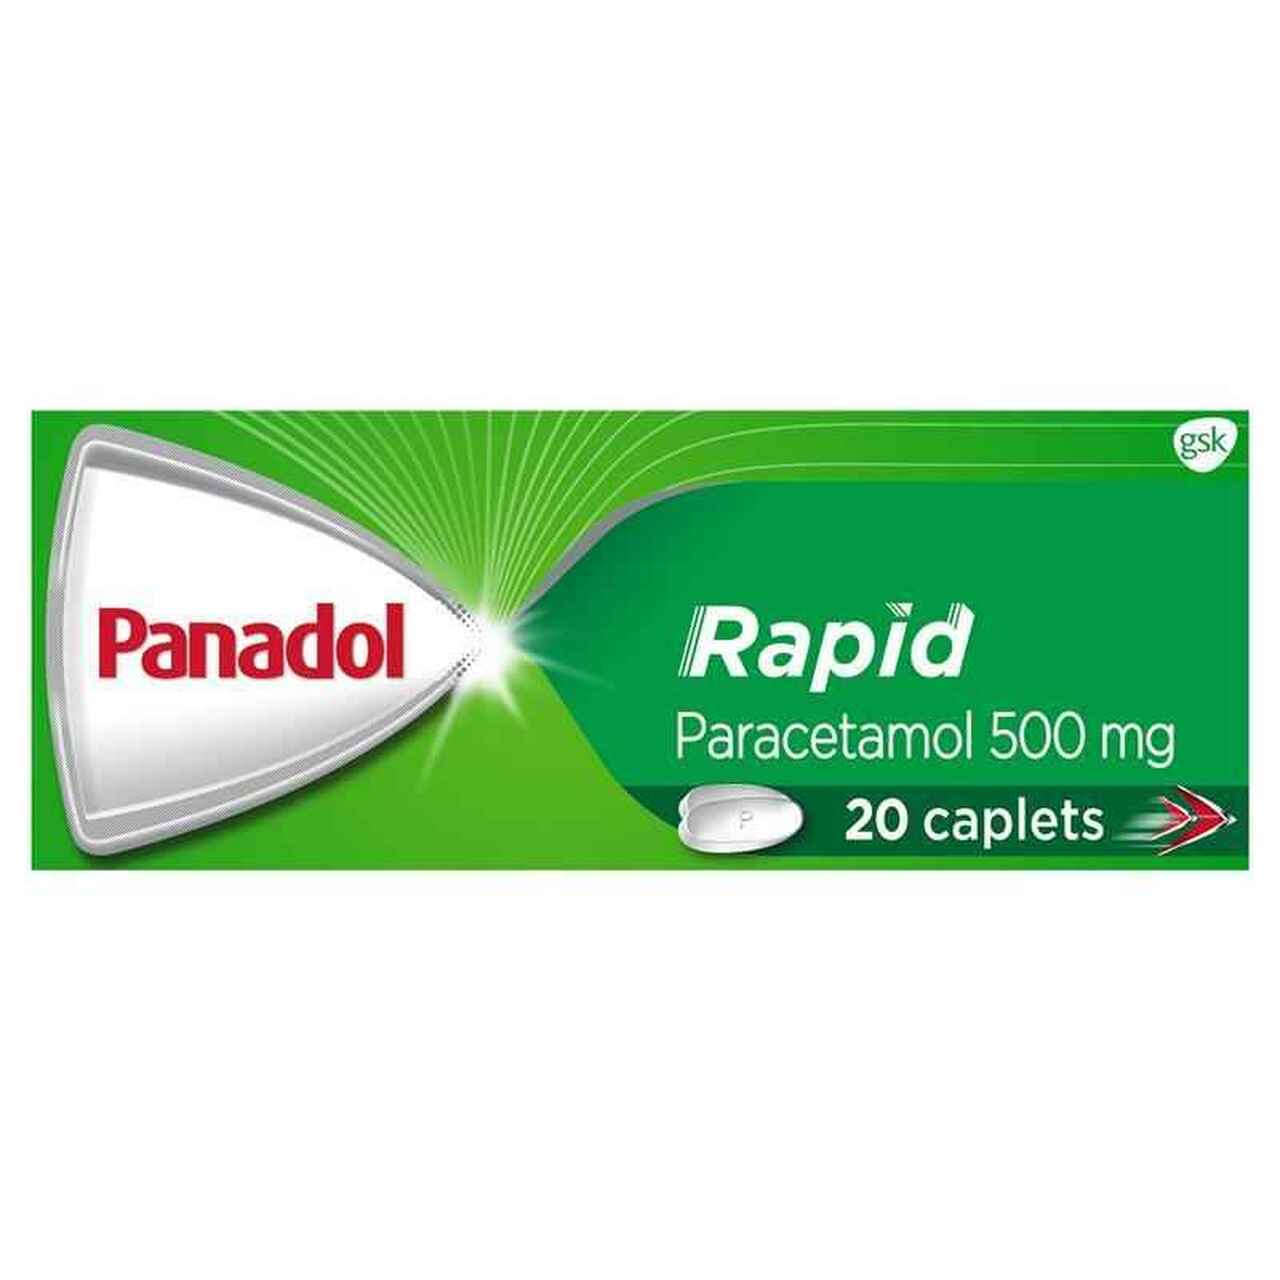 Panadol Rapid Paracetamol 20 Caplets 500mg